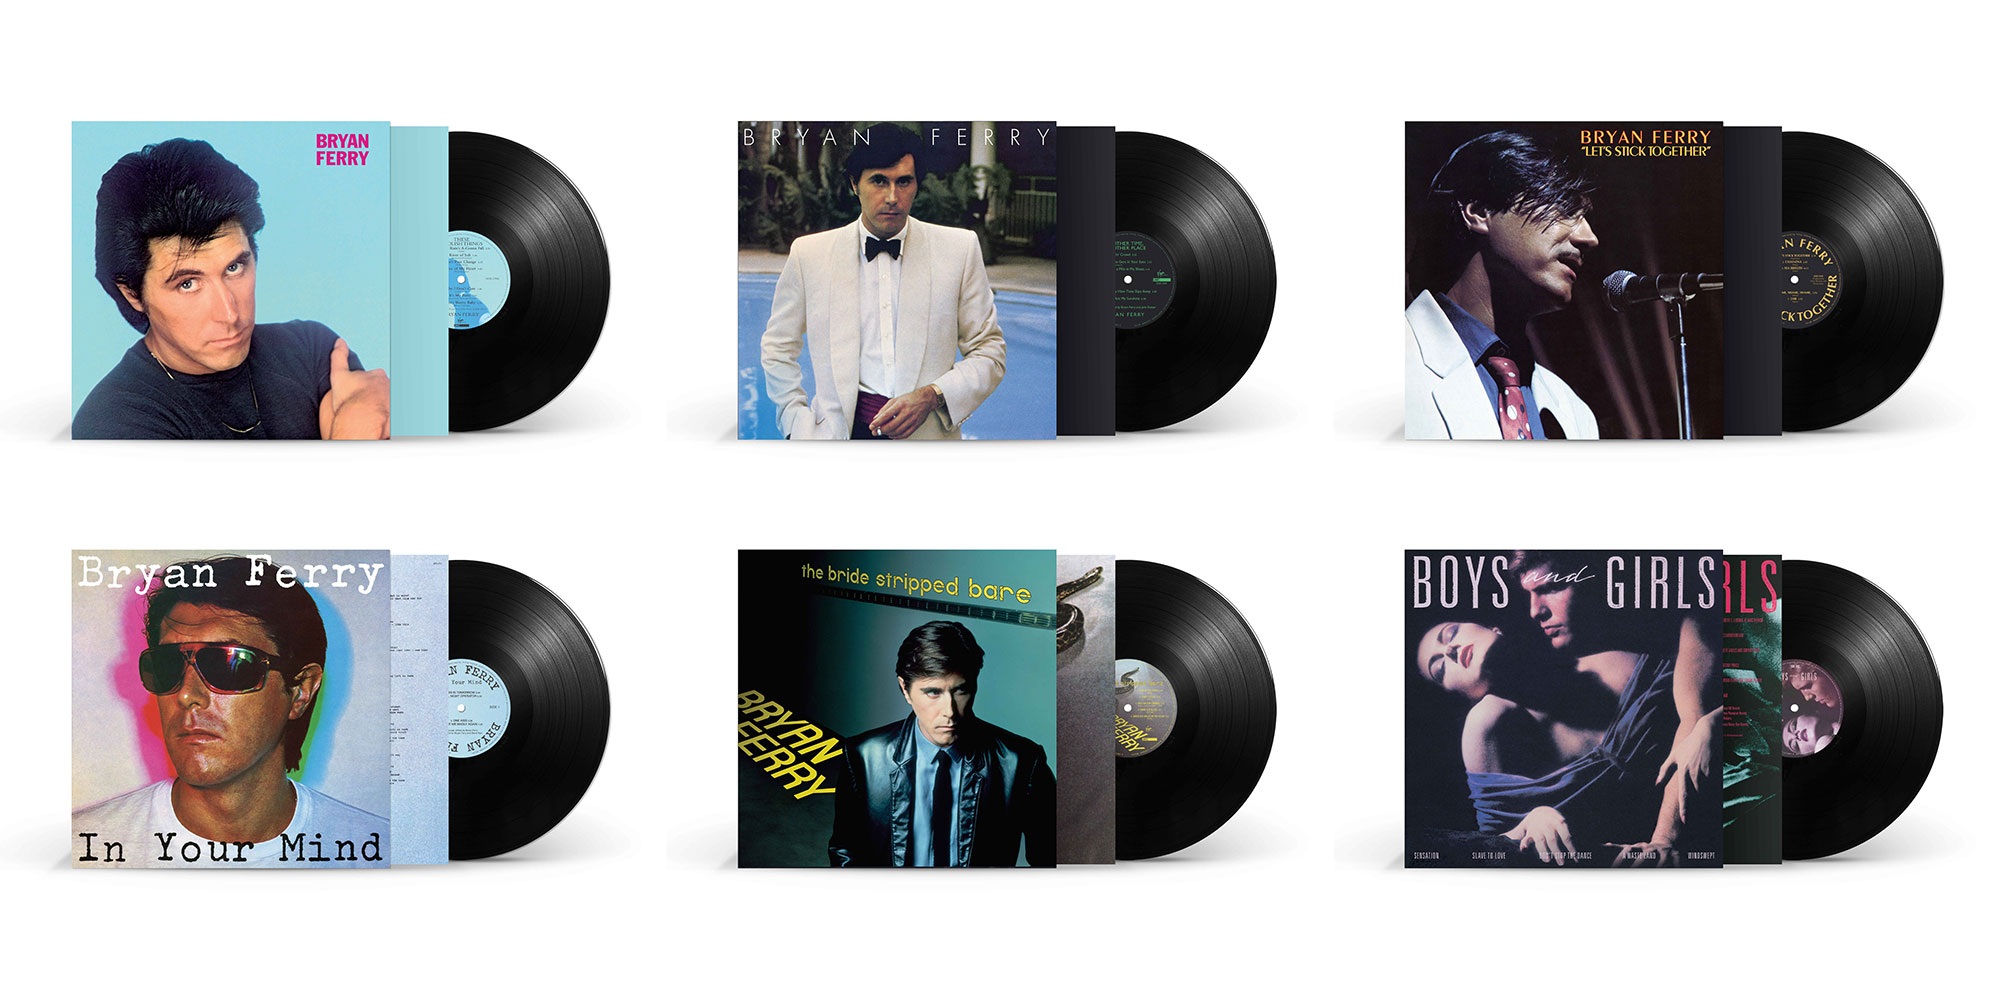 Bryan Ferry solo albums on vinyl